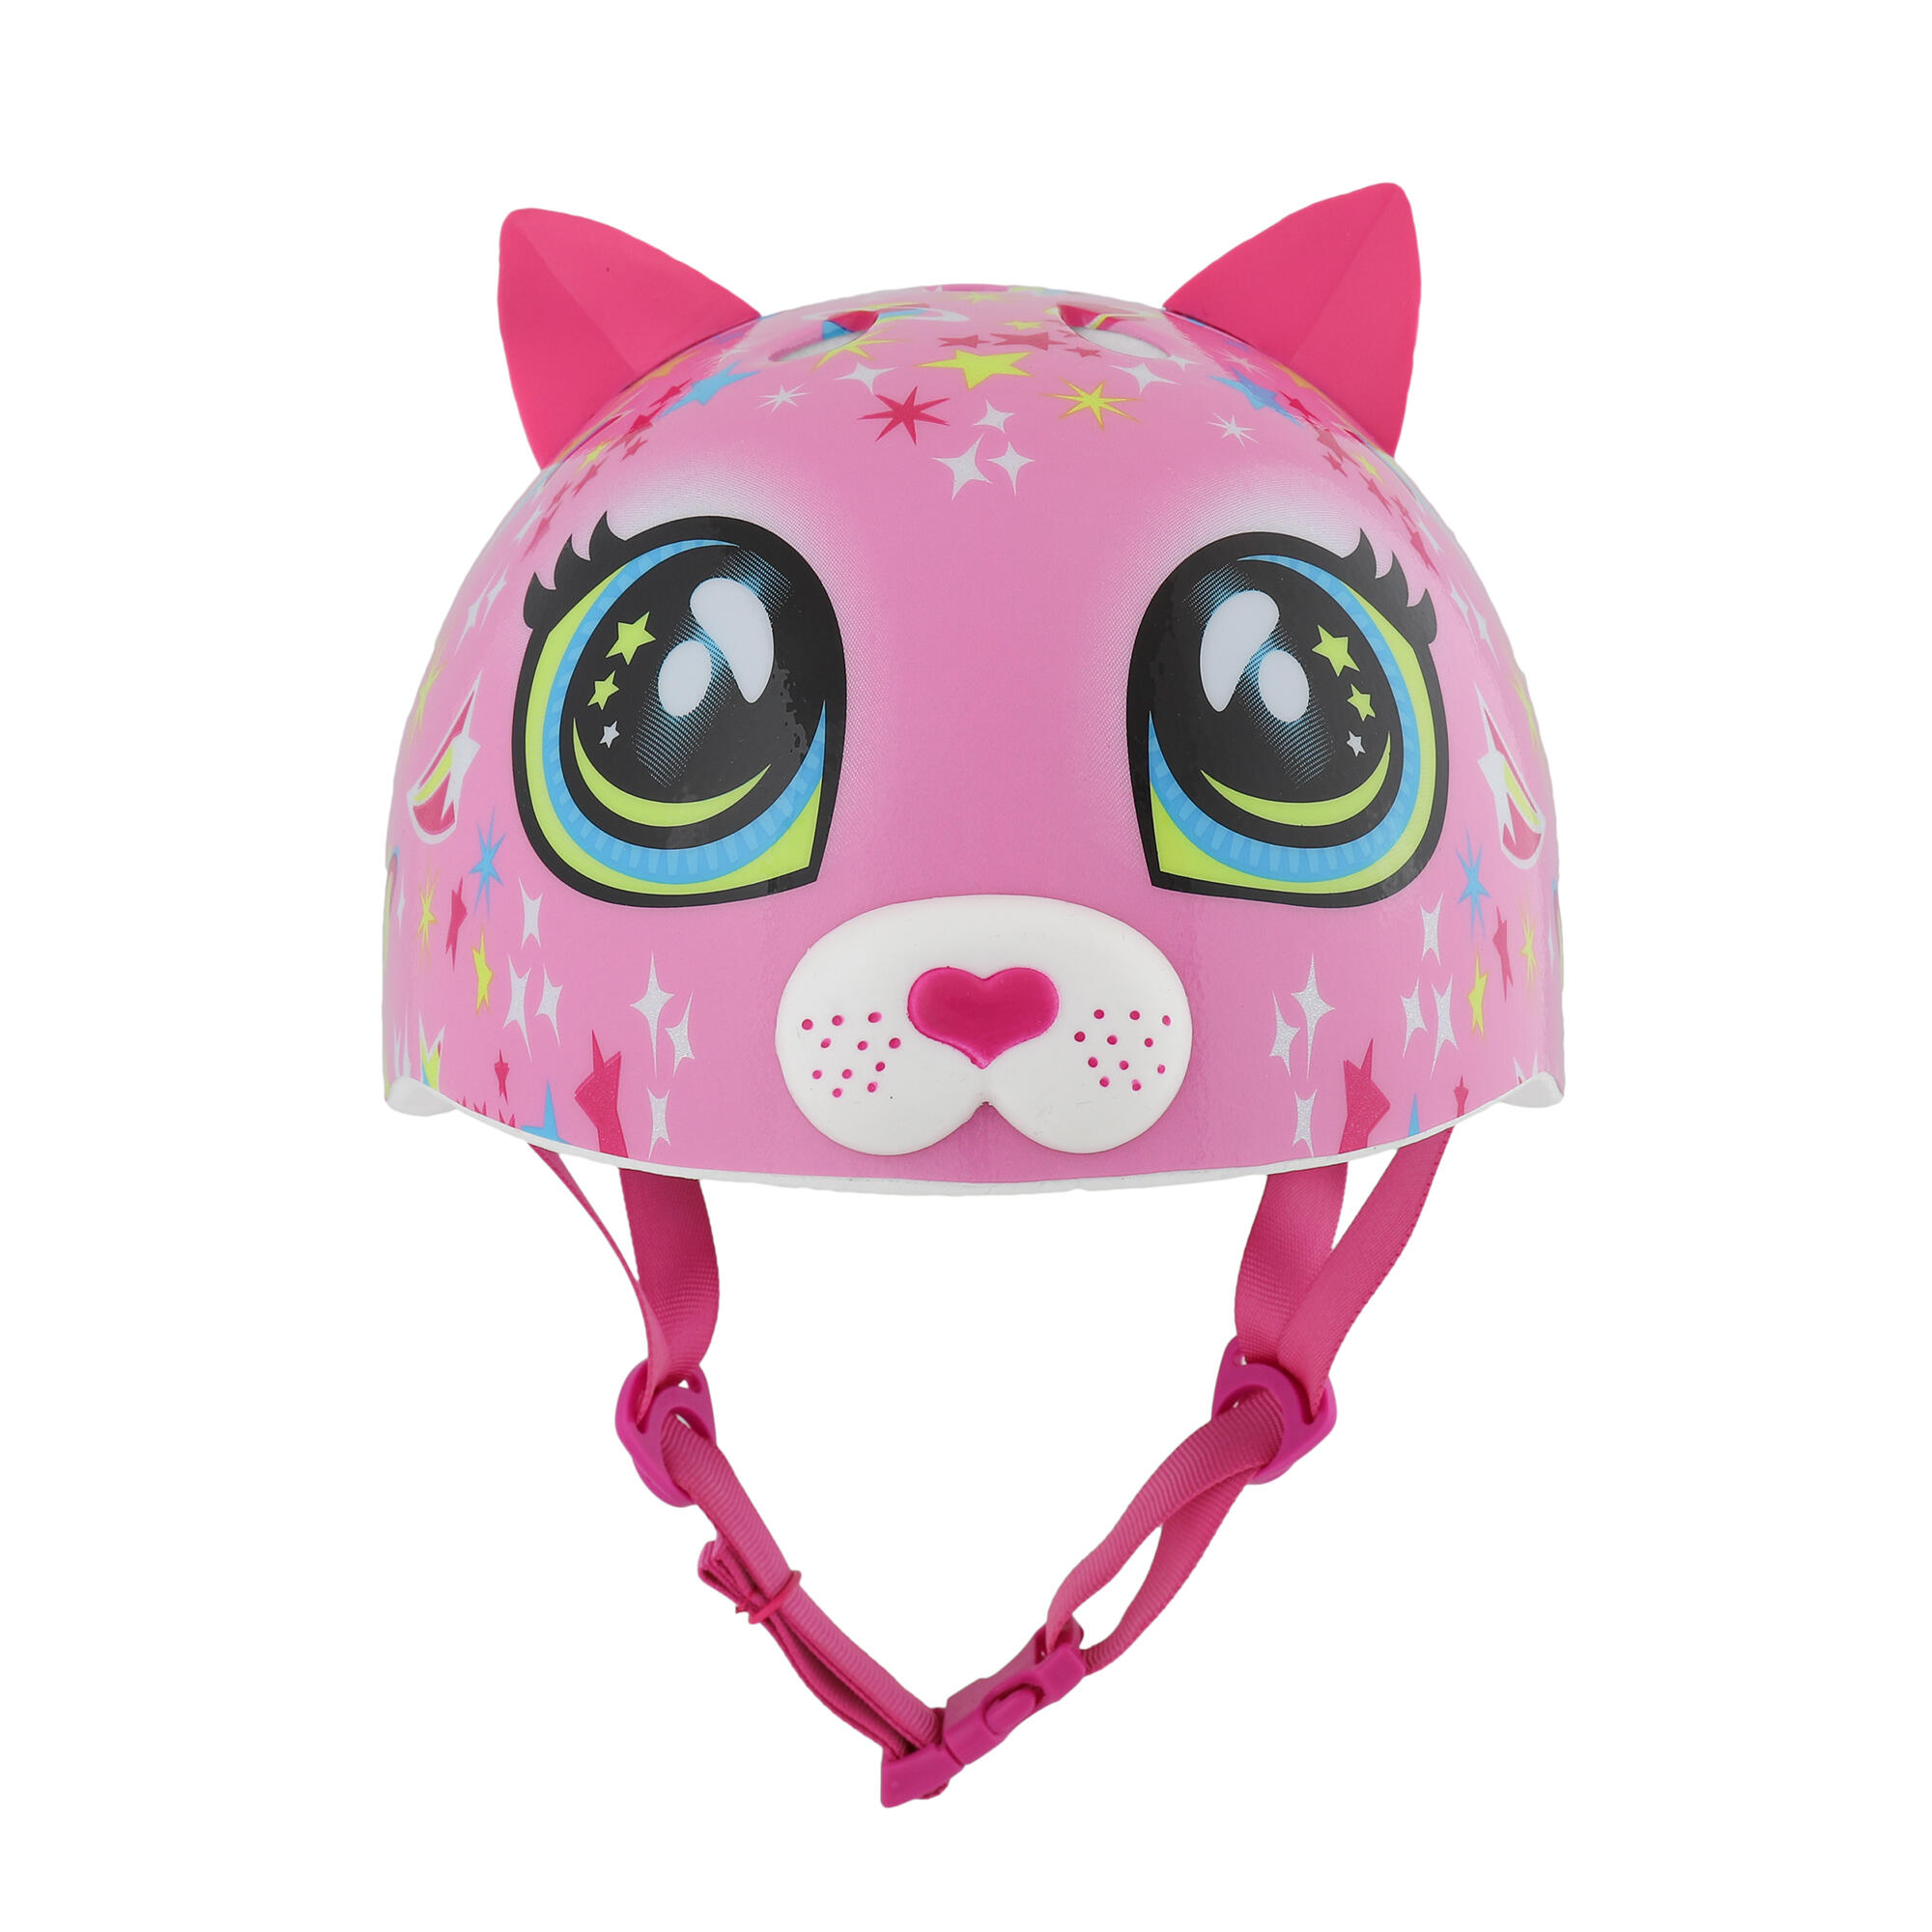 Raskullz FS Toddlers Helmet - Astro Cat Pink Astro Cat Pink Unisize 48-52cm 5/5